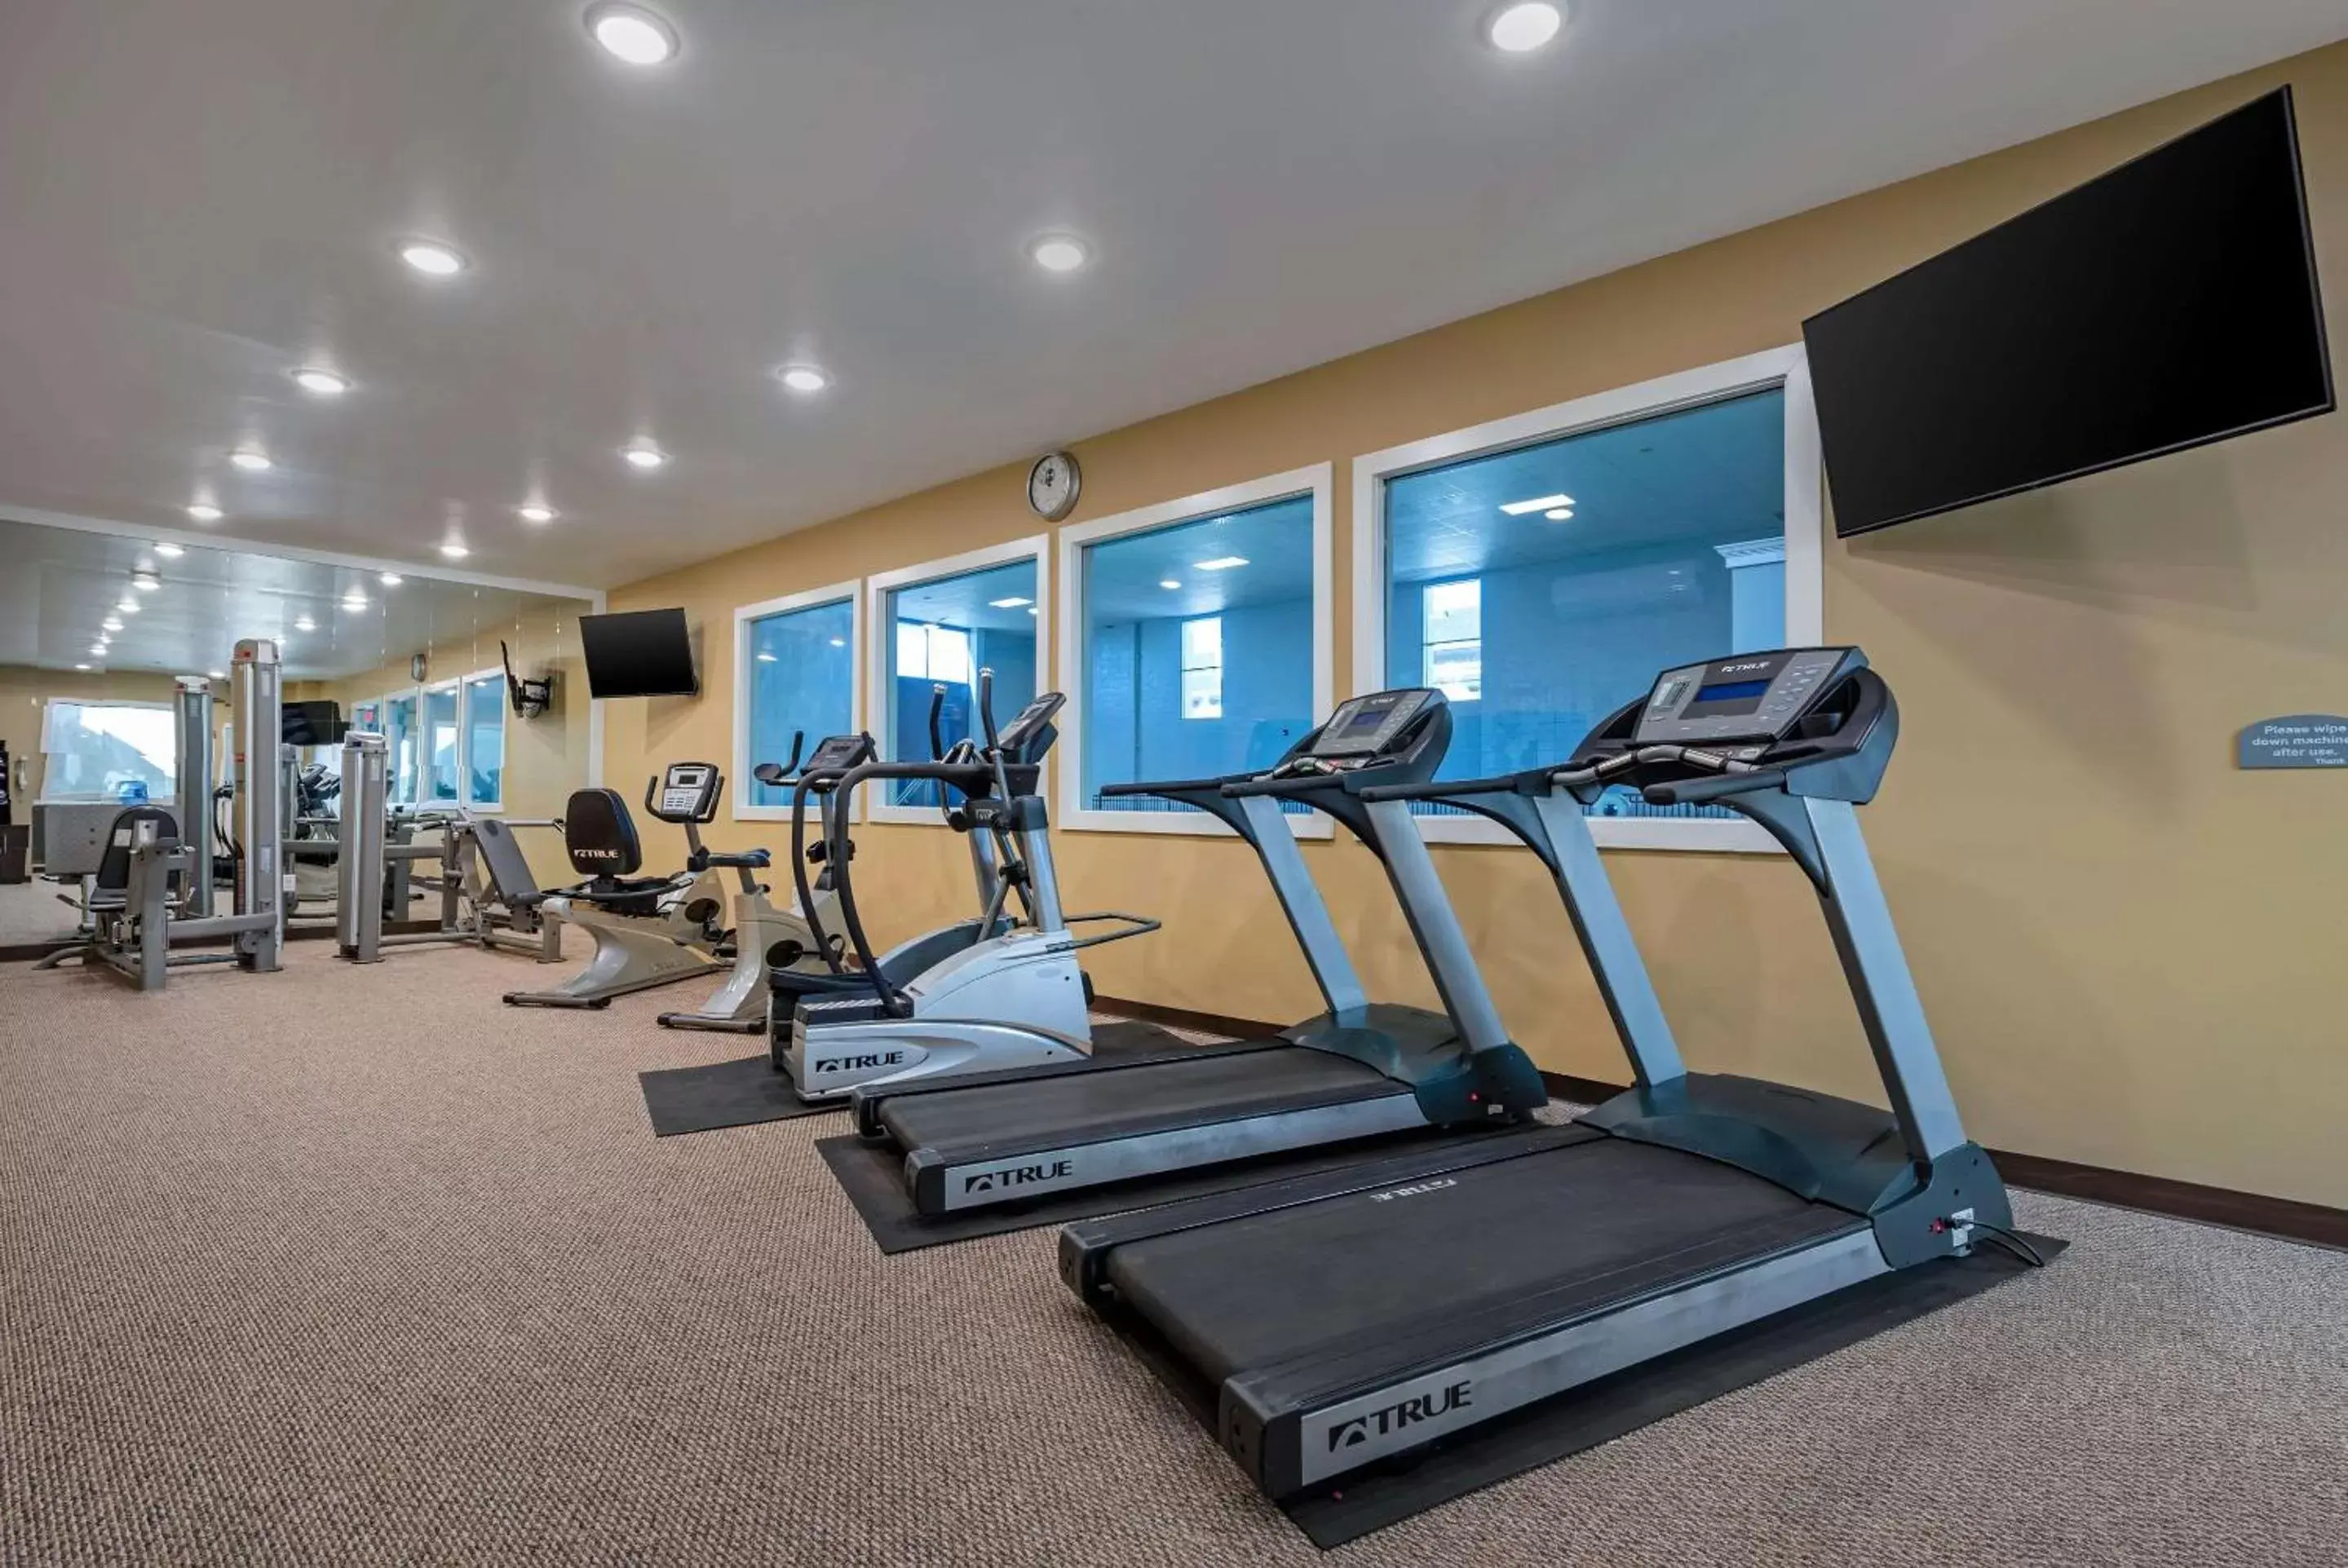 Fitness centre/facilities, Fitness Center/Facilities in Clarion Hotel Lexington